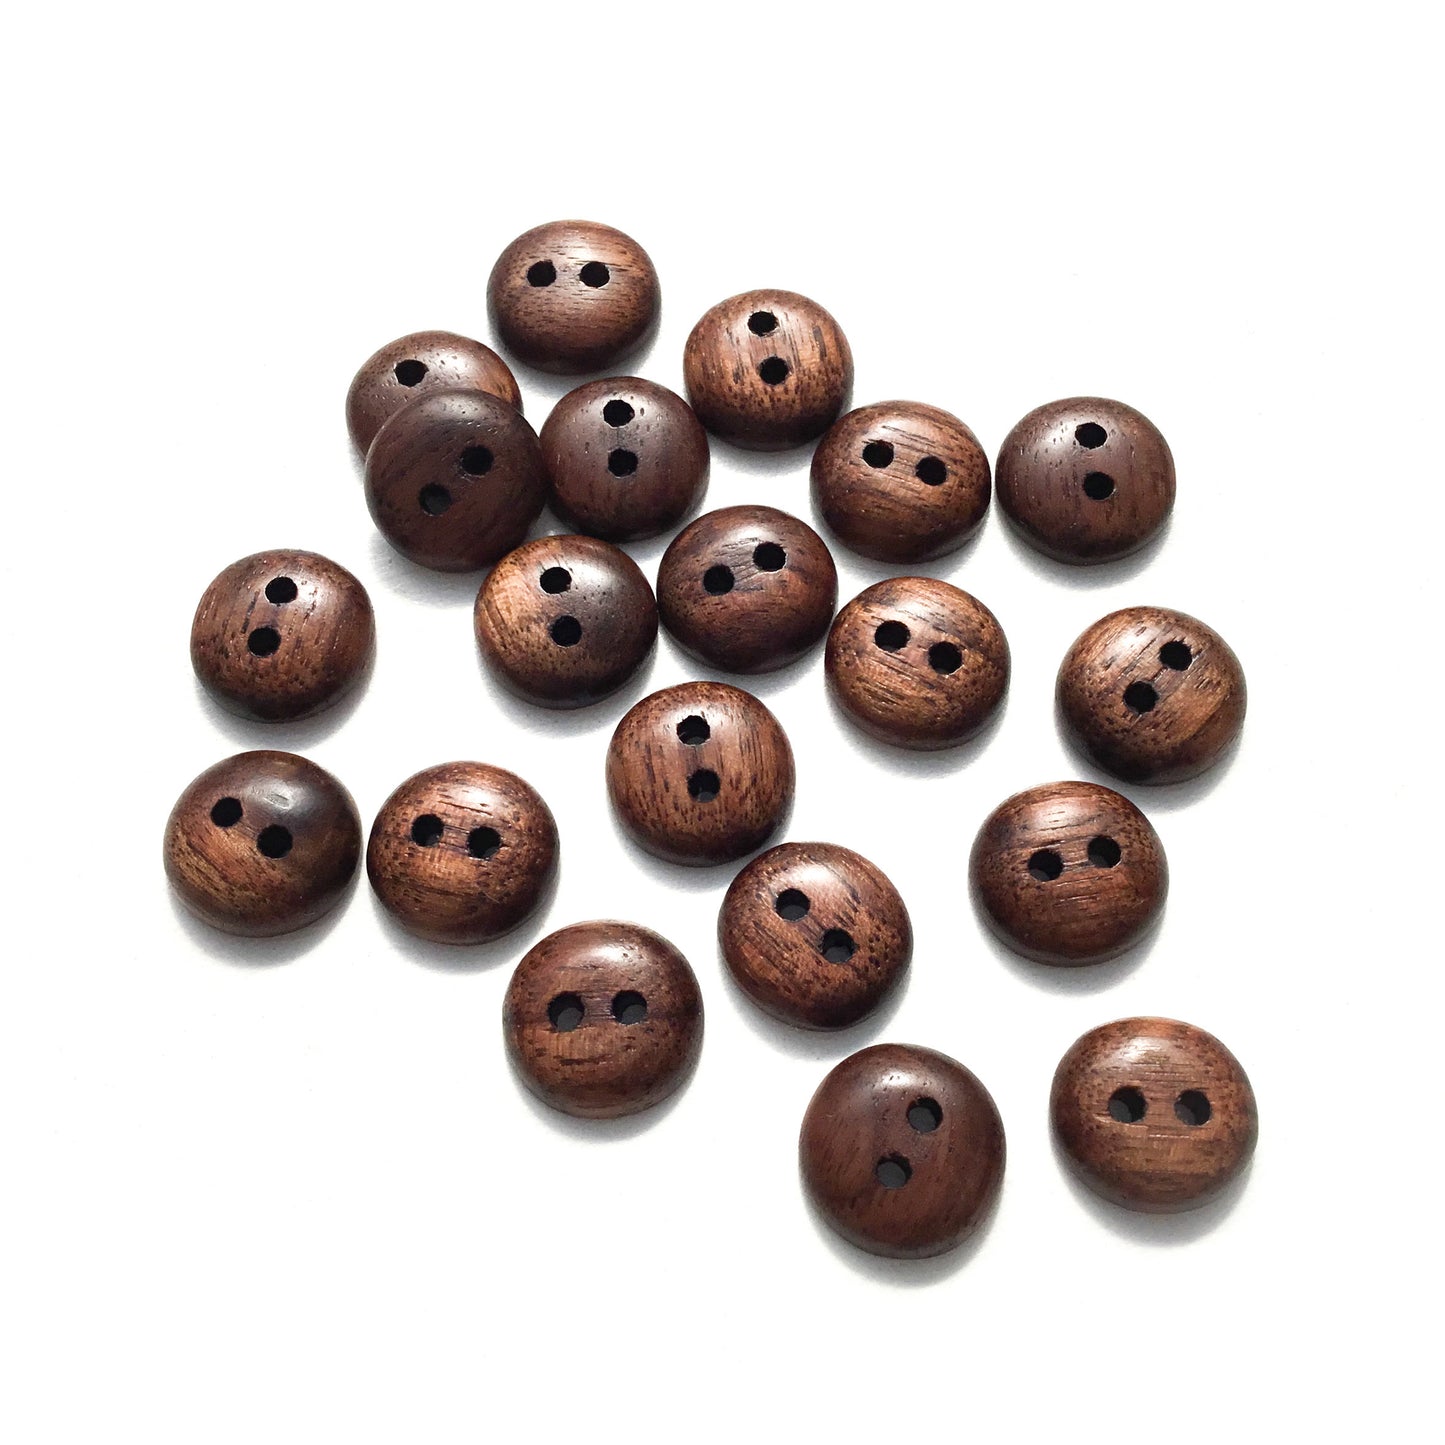 Black Walnut Wood Buttons - 1/2"